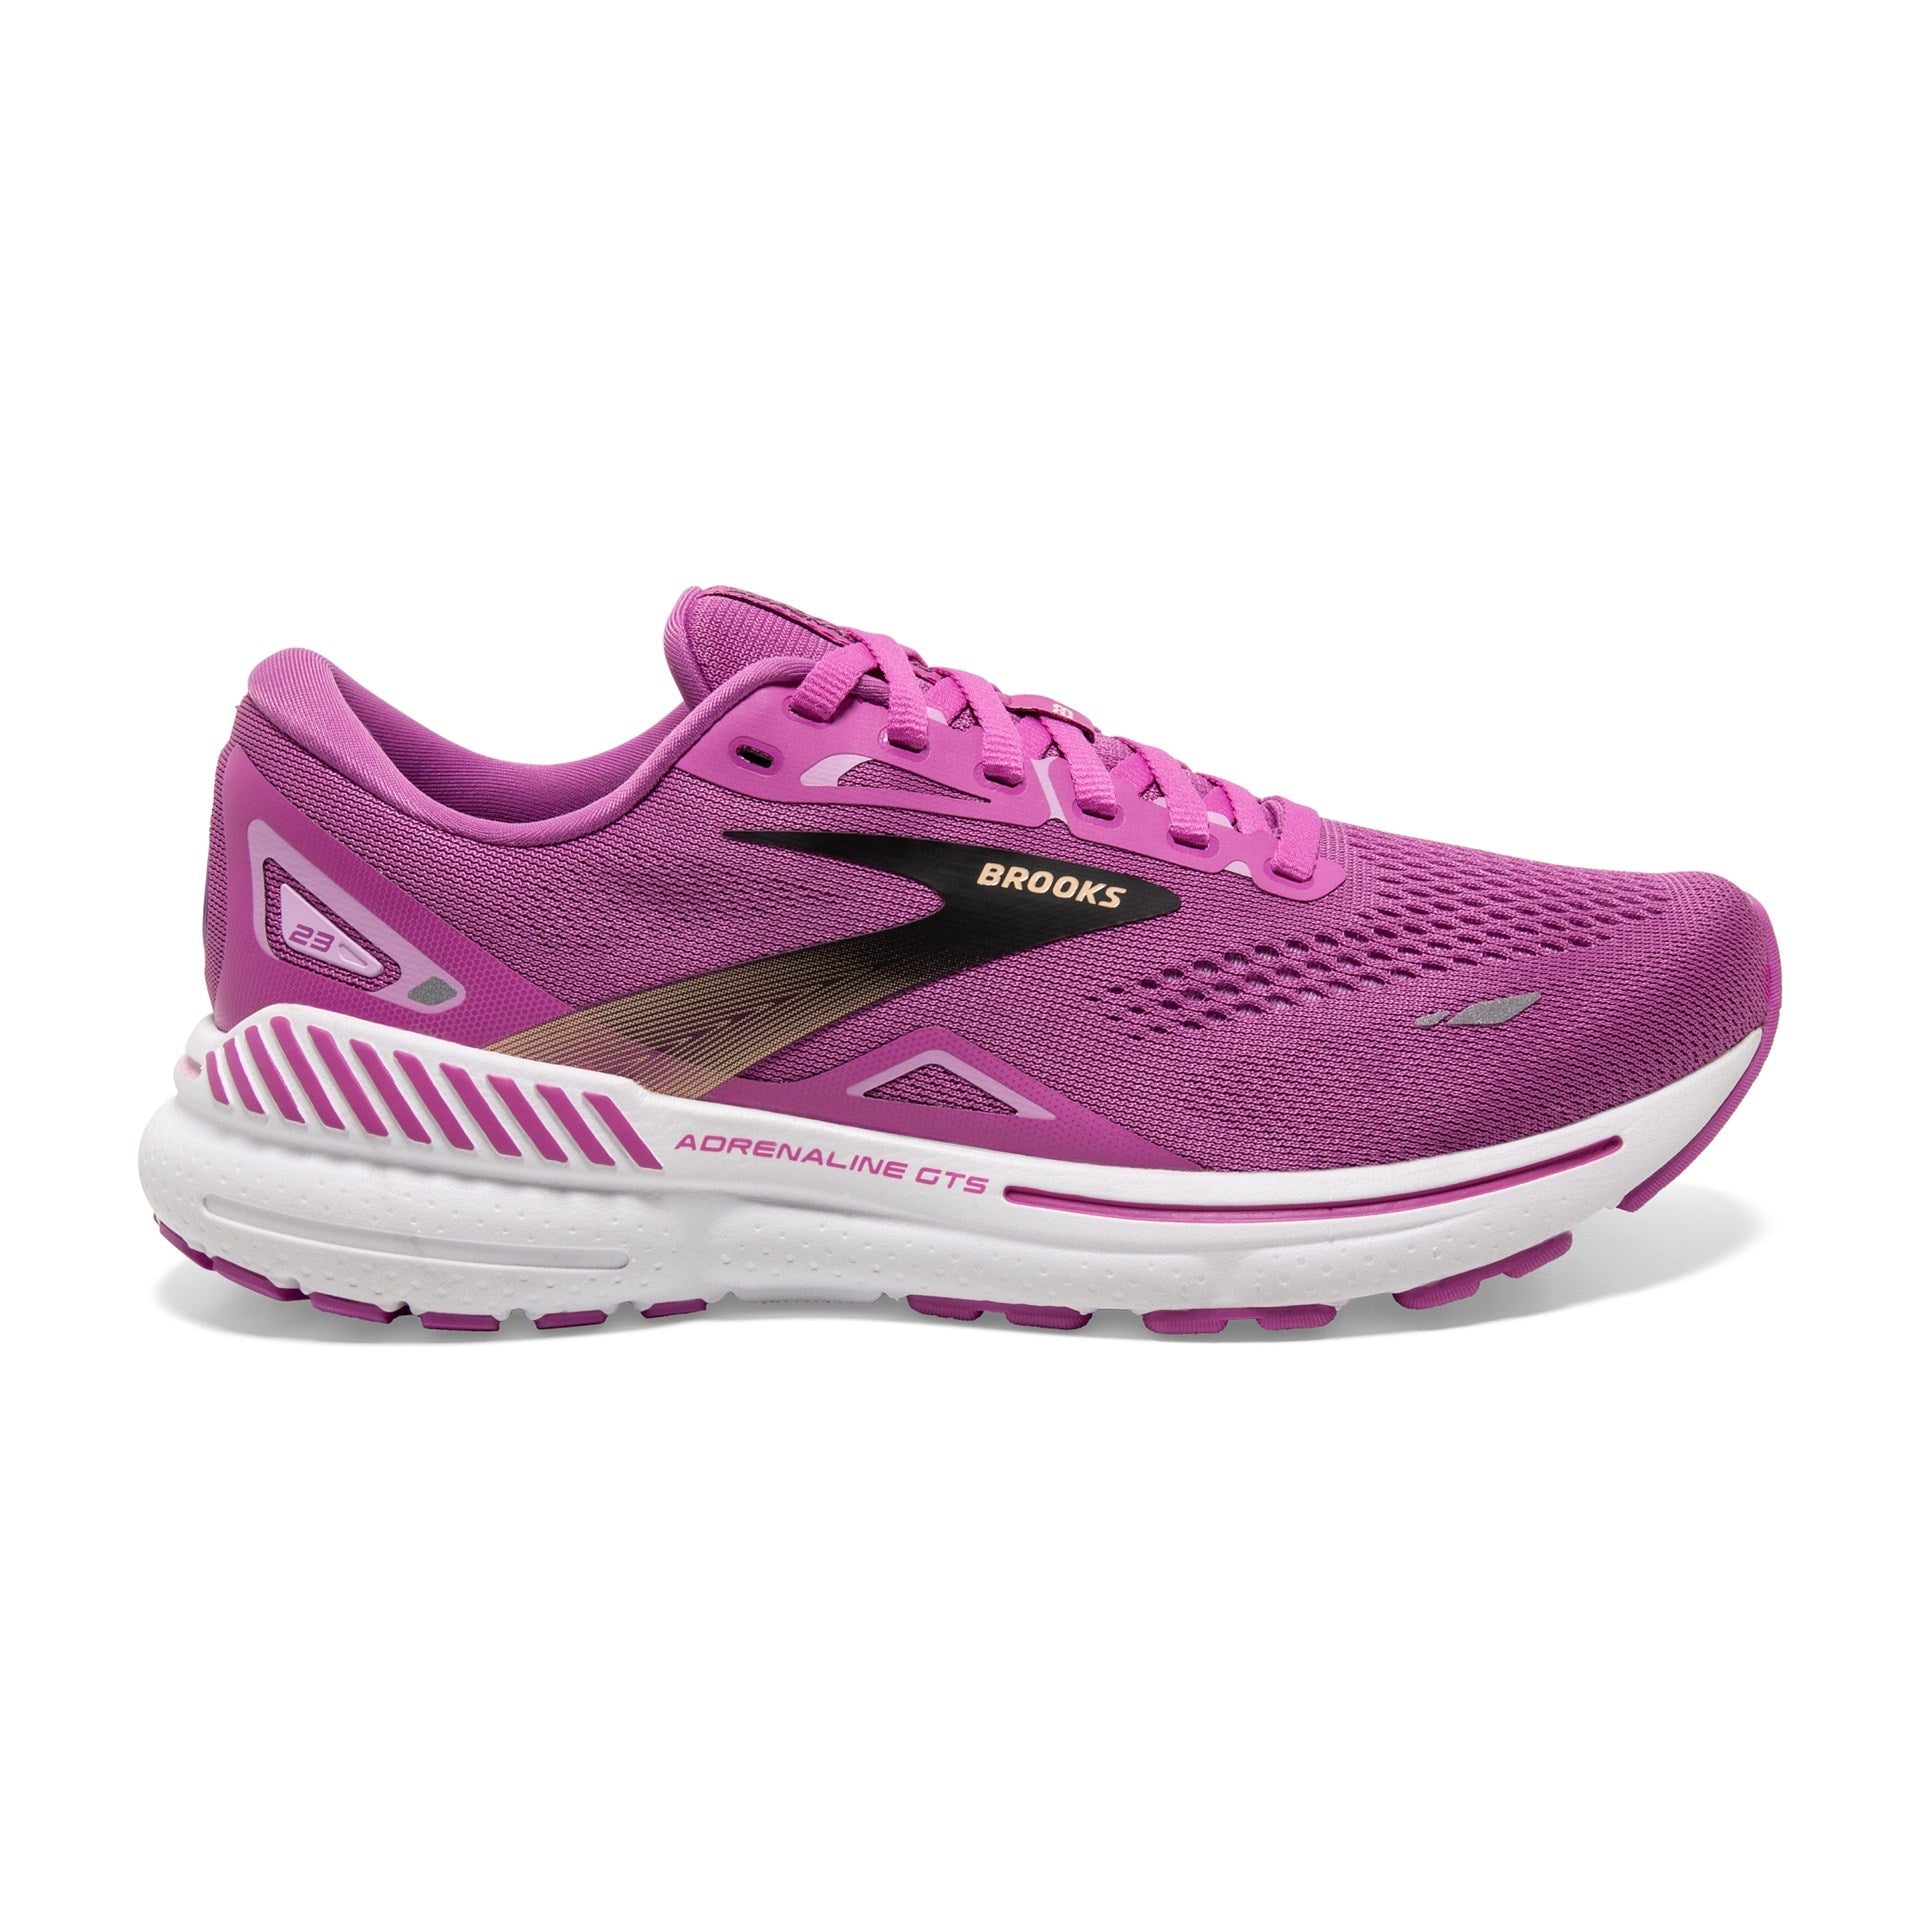 Brooks Adrenaline GTS 23 Running Shoes - Womens - Orchid/Black/Purple